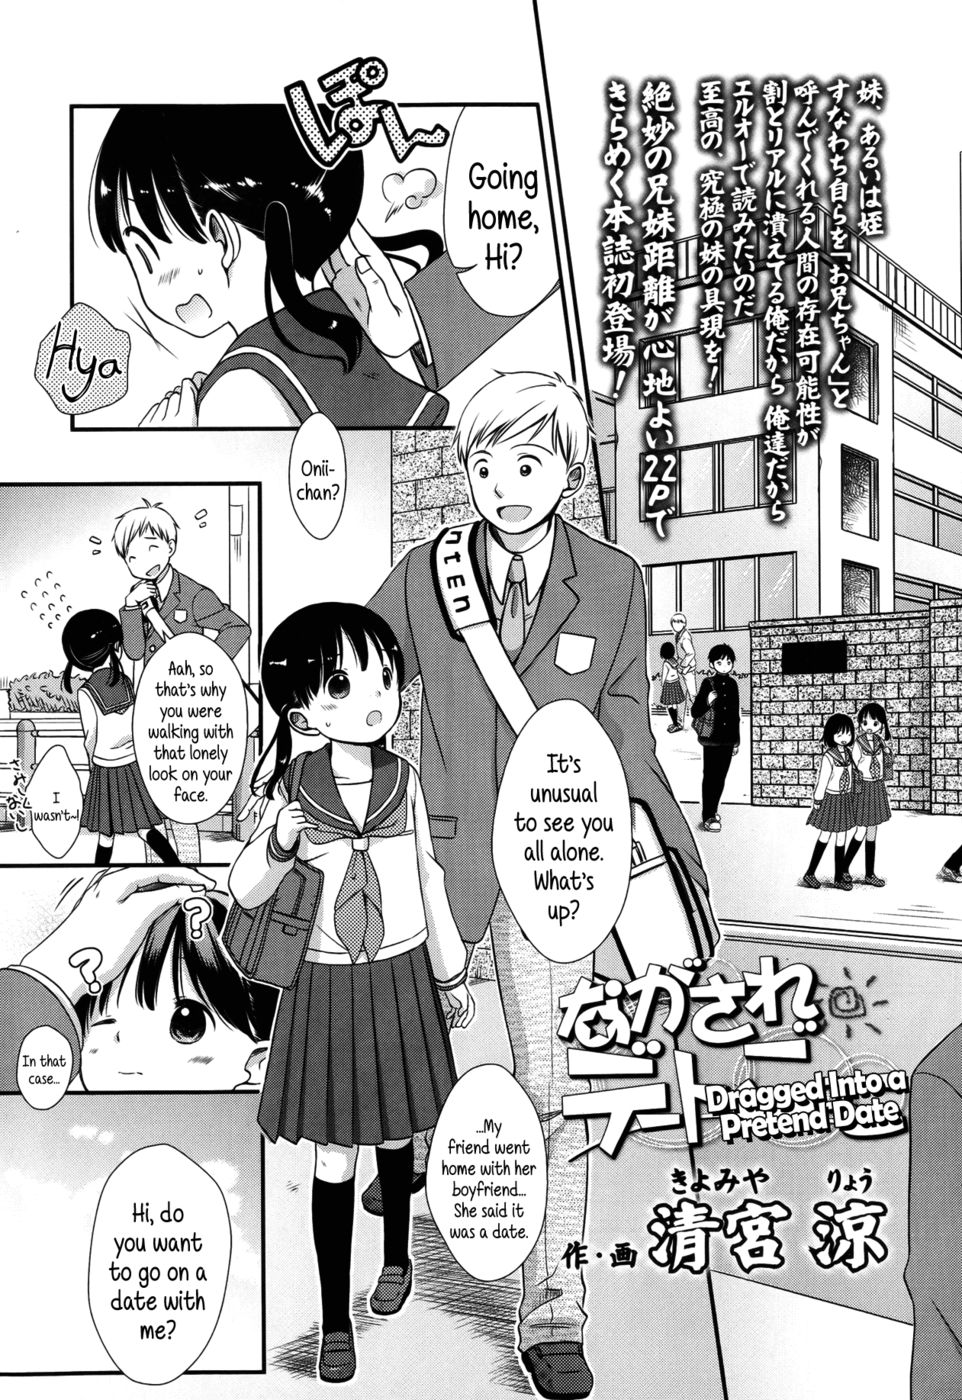 Hentai Manga Comic-Dragged Into a Pretend Date-Read-1